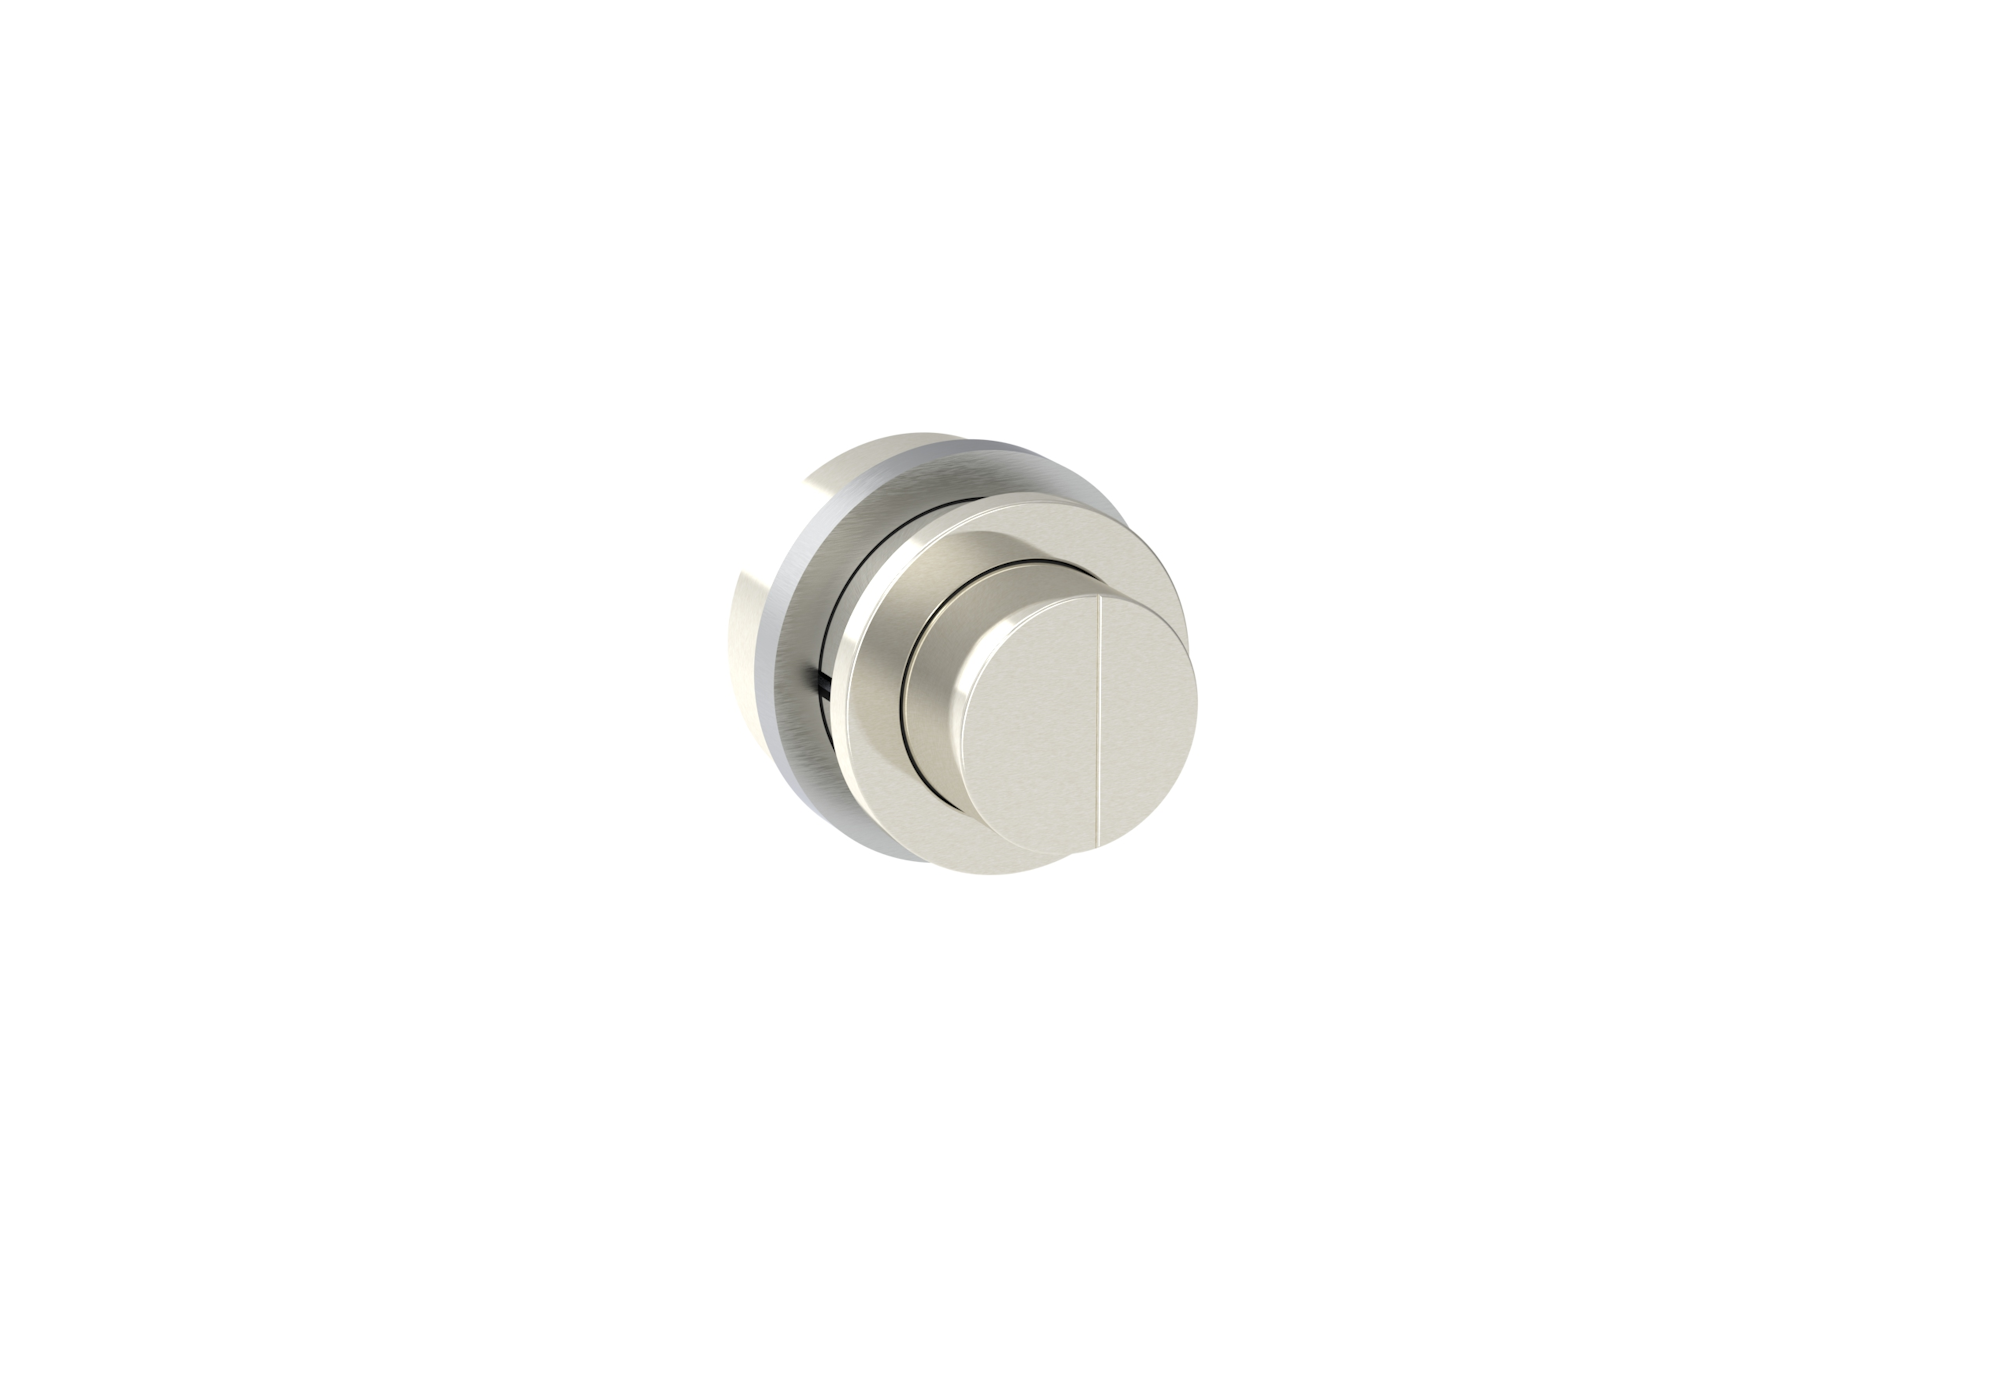 FLUSHE 2.0 brass flush button (for HC2030) - Brushed Nickel PVD